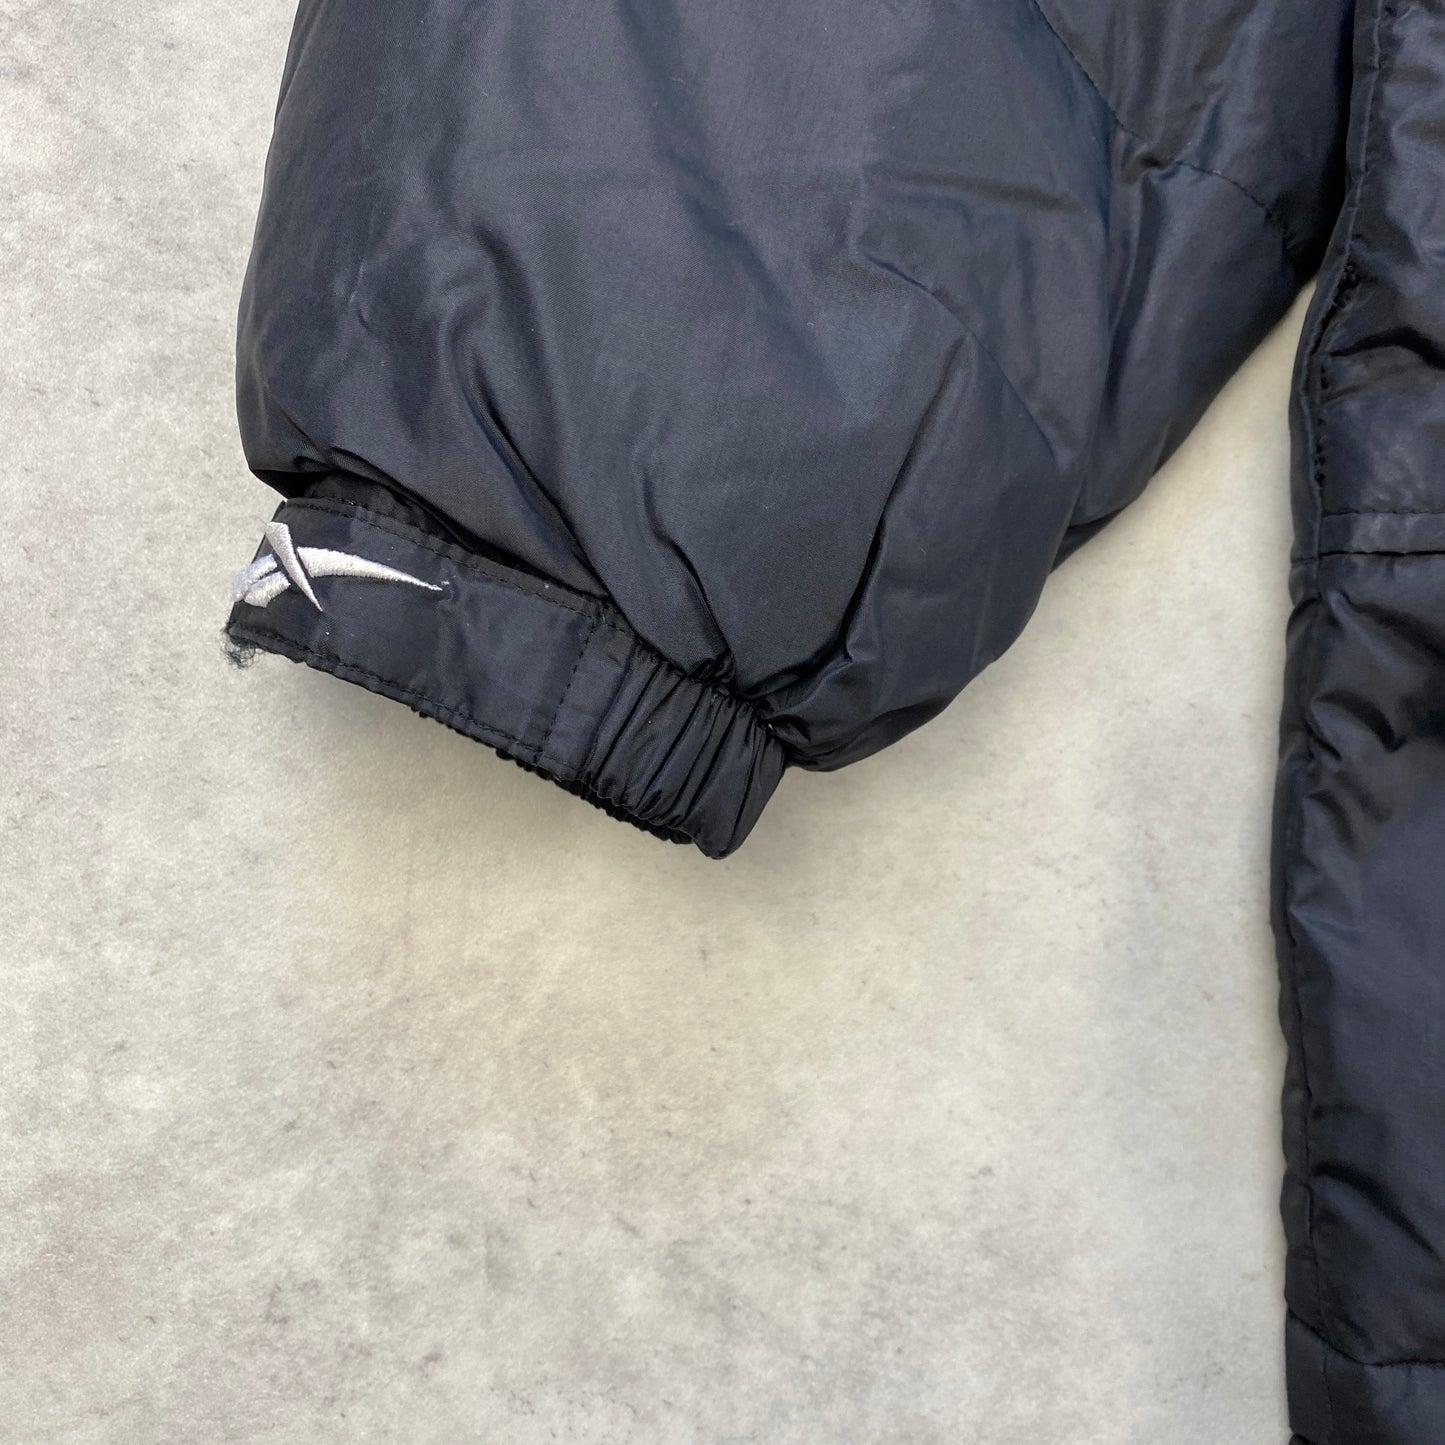 Reebok puffer jacket (XL-XXL)